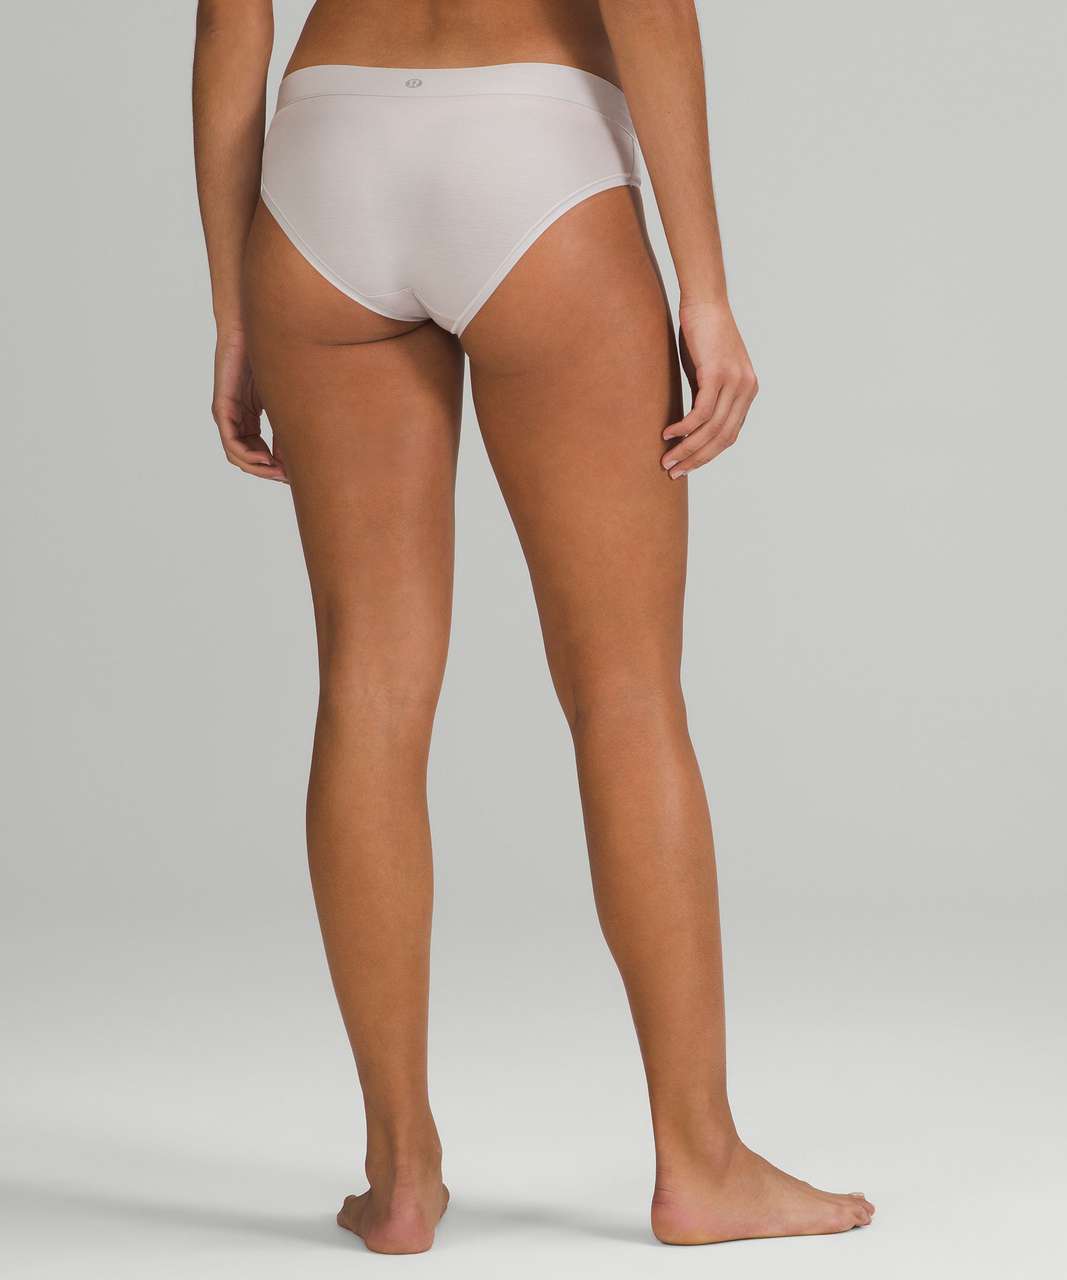 Lululemon UnderEase Mid-Rise Bikini Underwear 3 Pack - Night Sea / Chrome / Date Brown